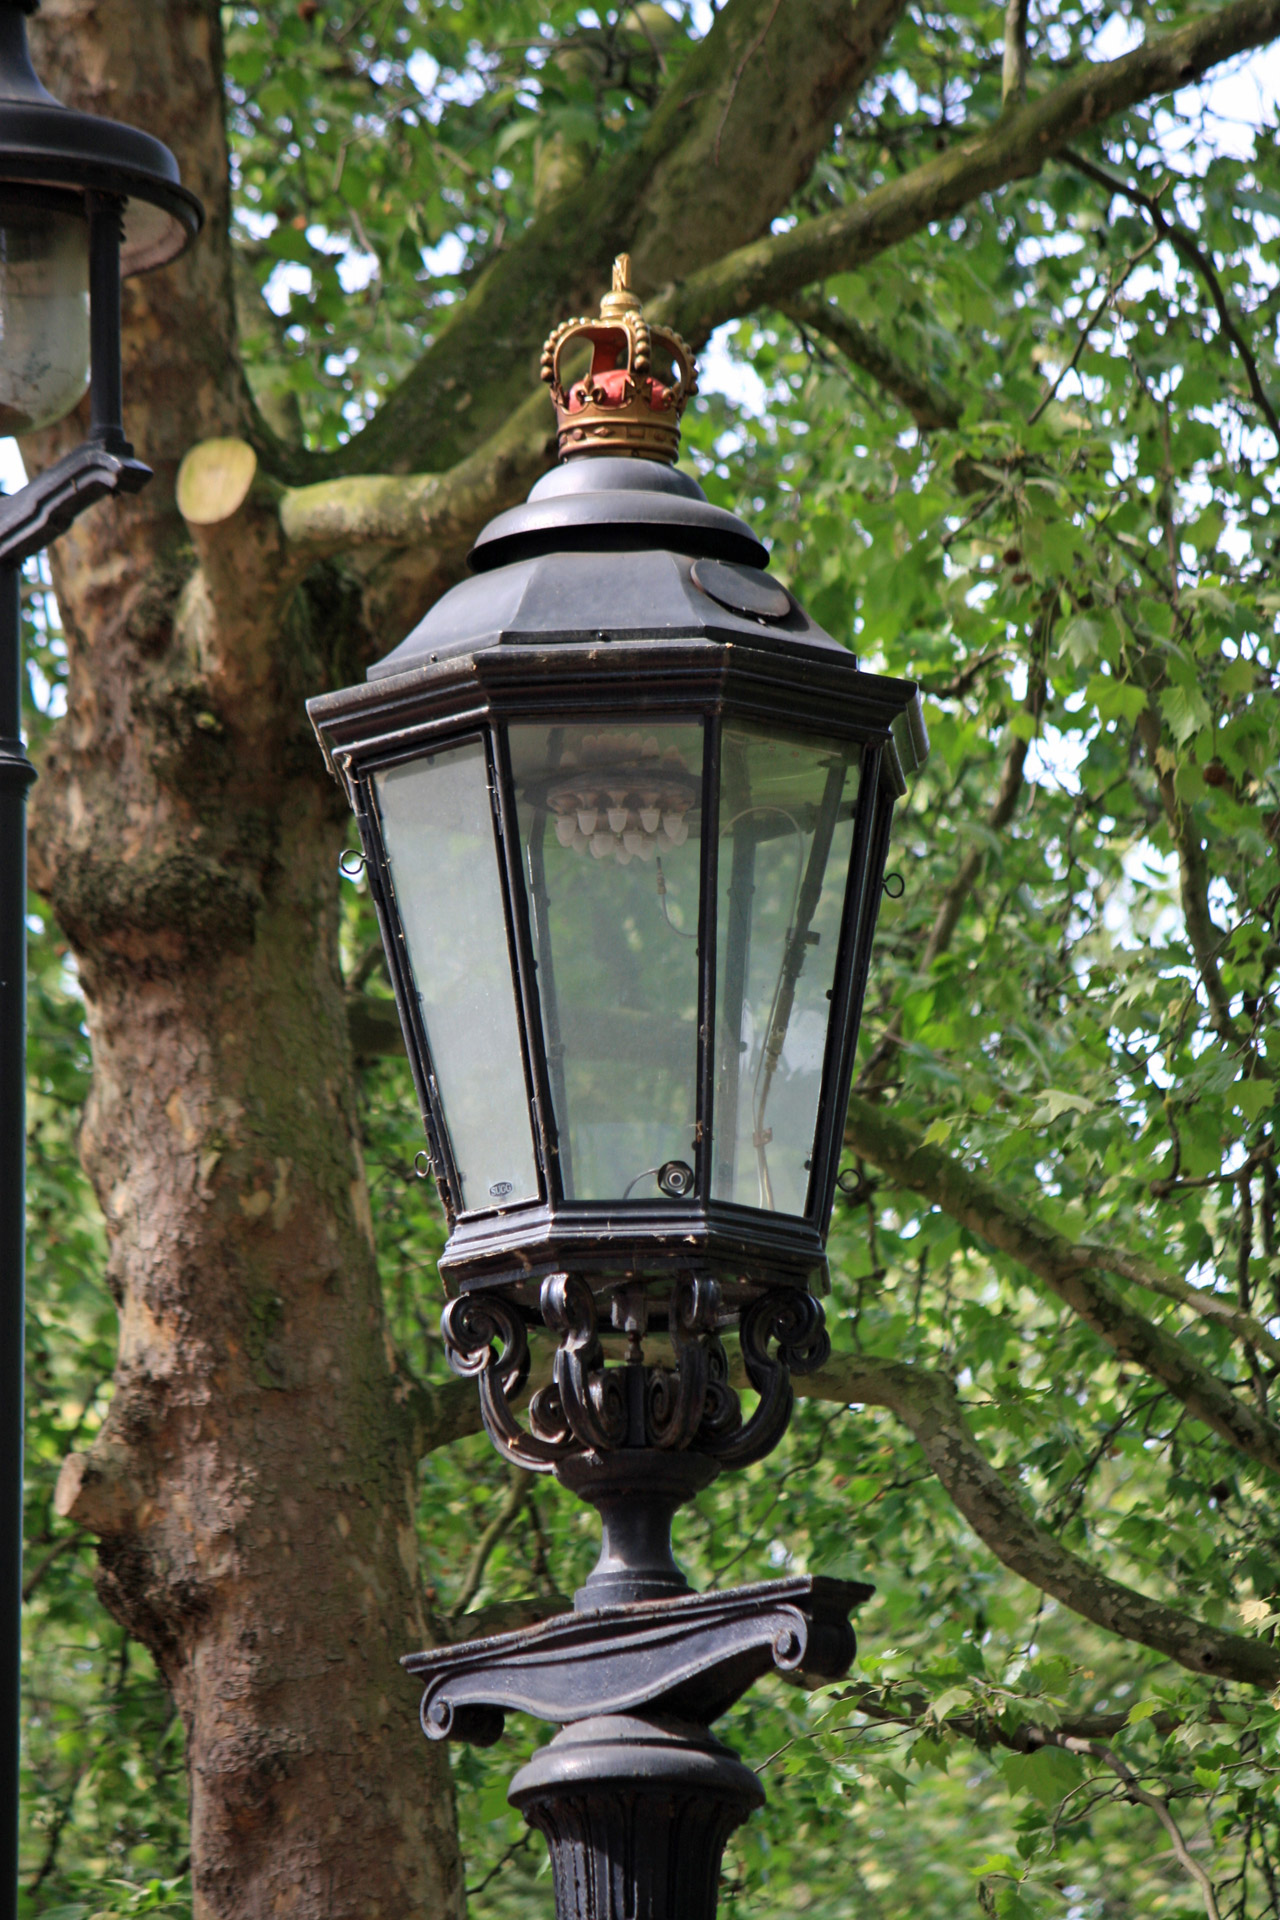 Vintage London Street Lamp with royal crown